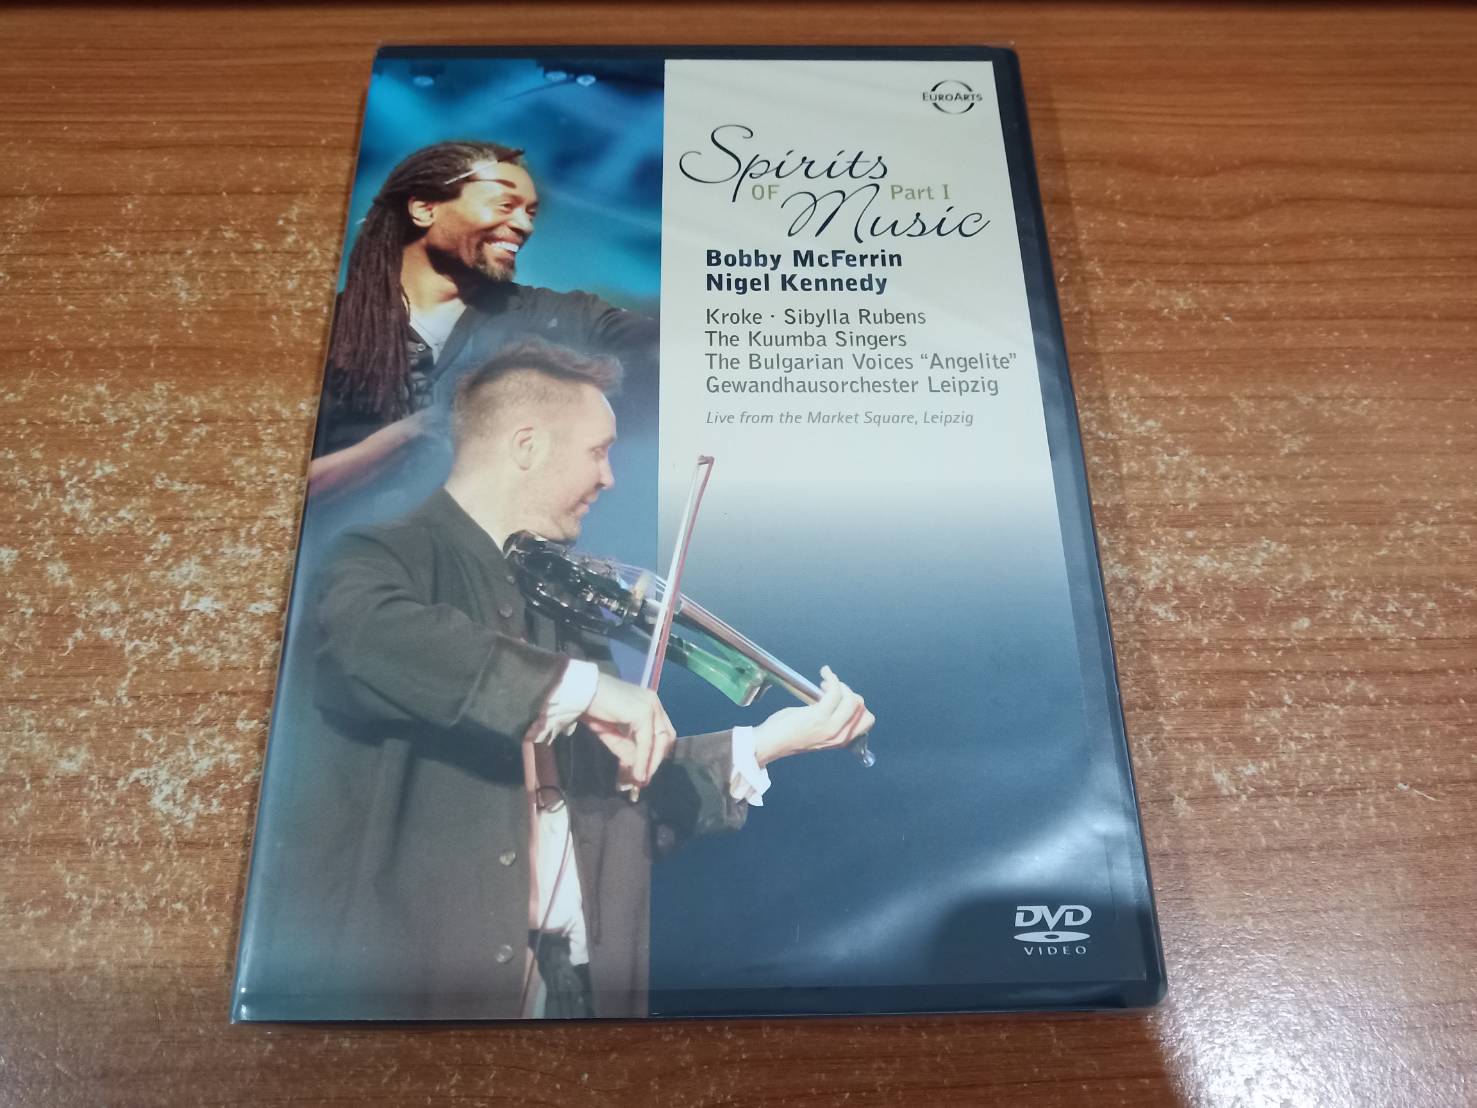 DVD MUSIC ซีดี เพลง SPIRITS OF MUSIC BOBBY MCFERRIN & FRIENDS PART 1***โปรดดูภาพและอ่านรายละเอียดสินค้าก่อนทำการสั่งซื้อ***